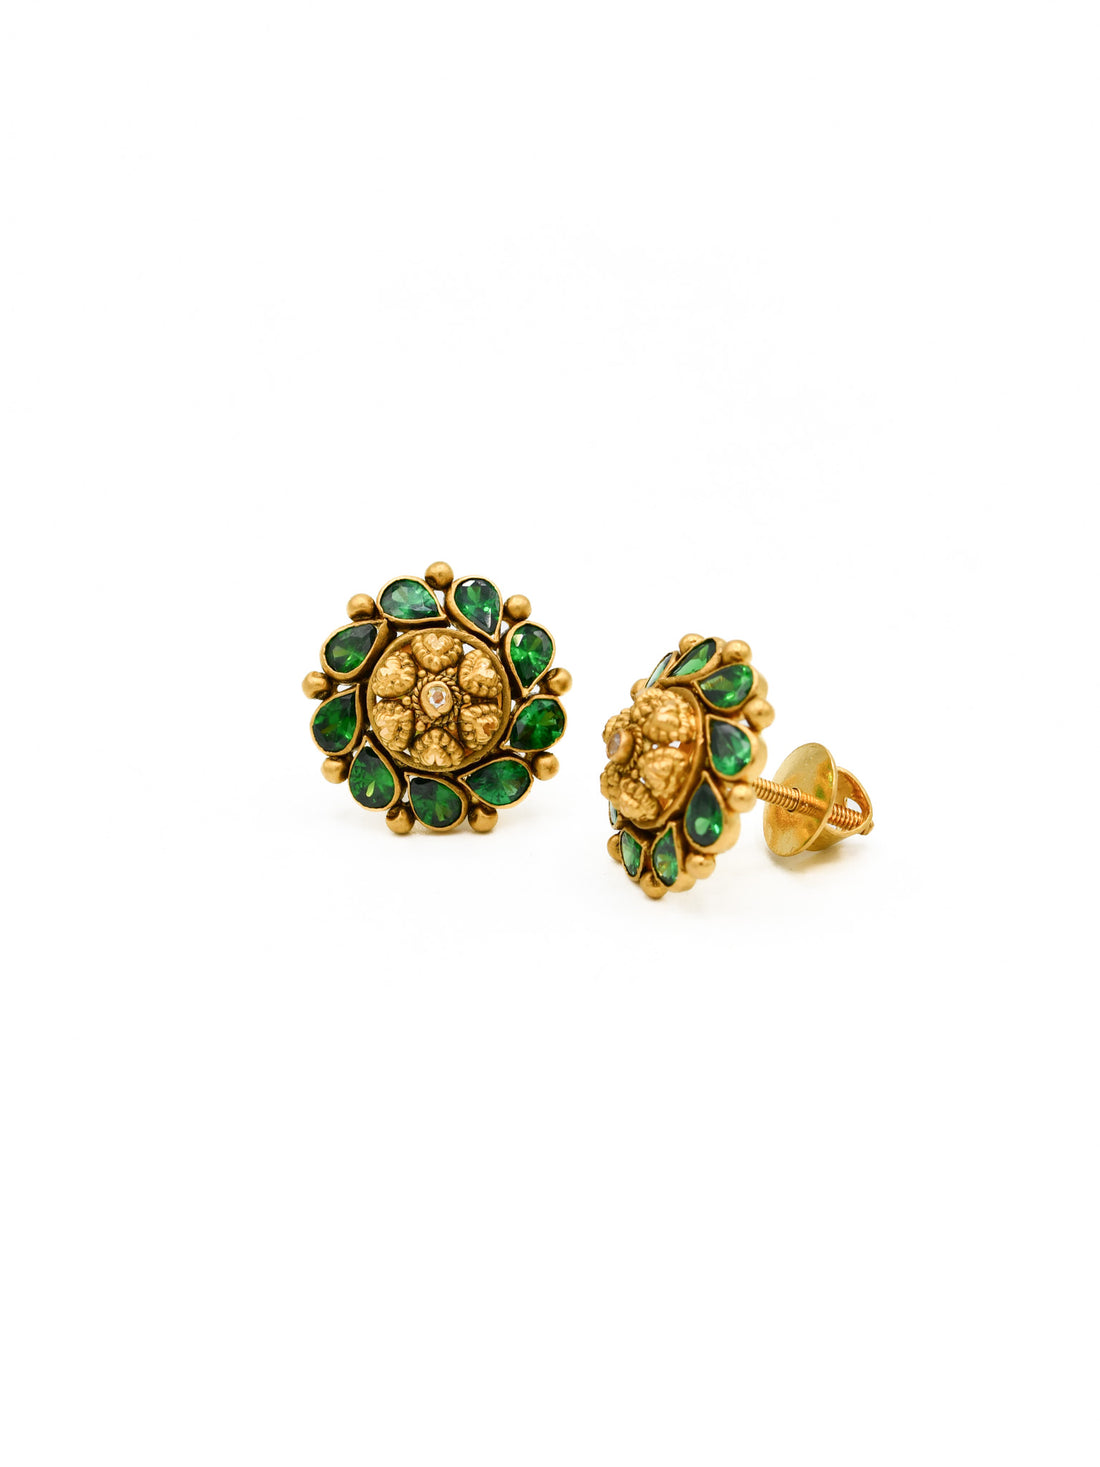 22ct Gold Antique Green CZ Stud Earrings - Roop Darshan